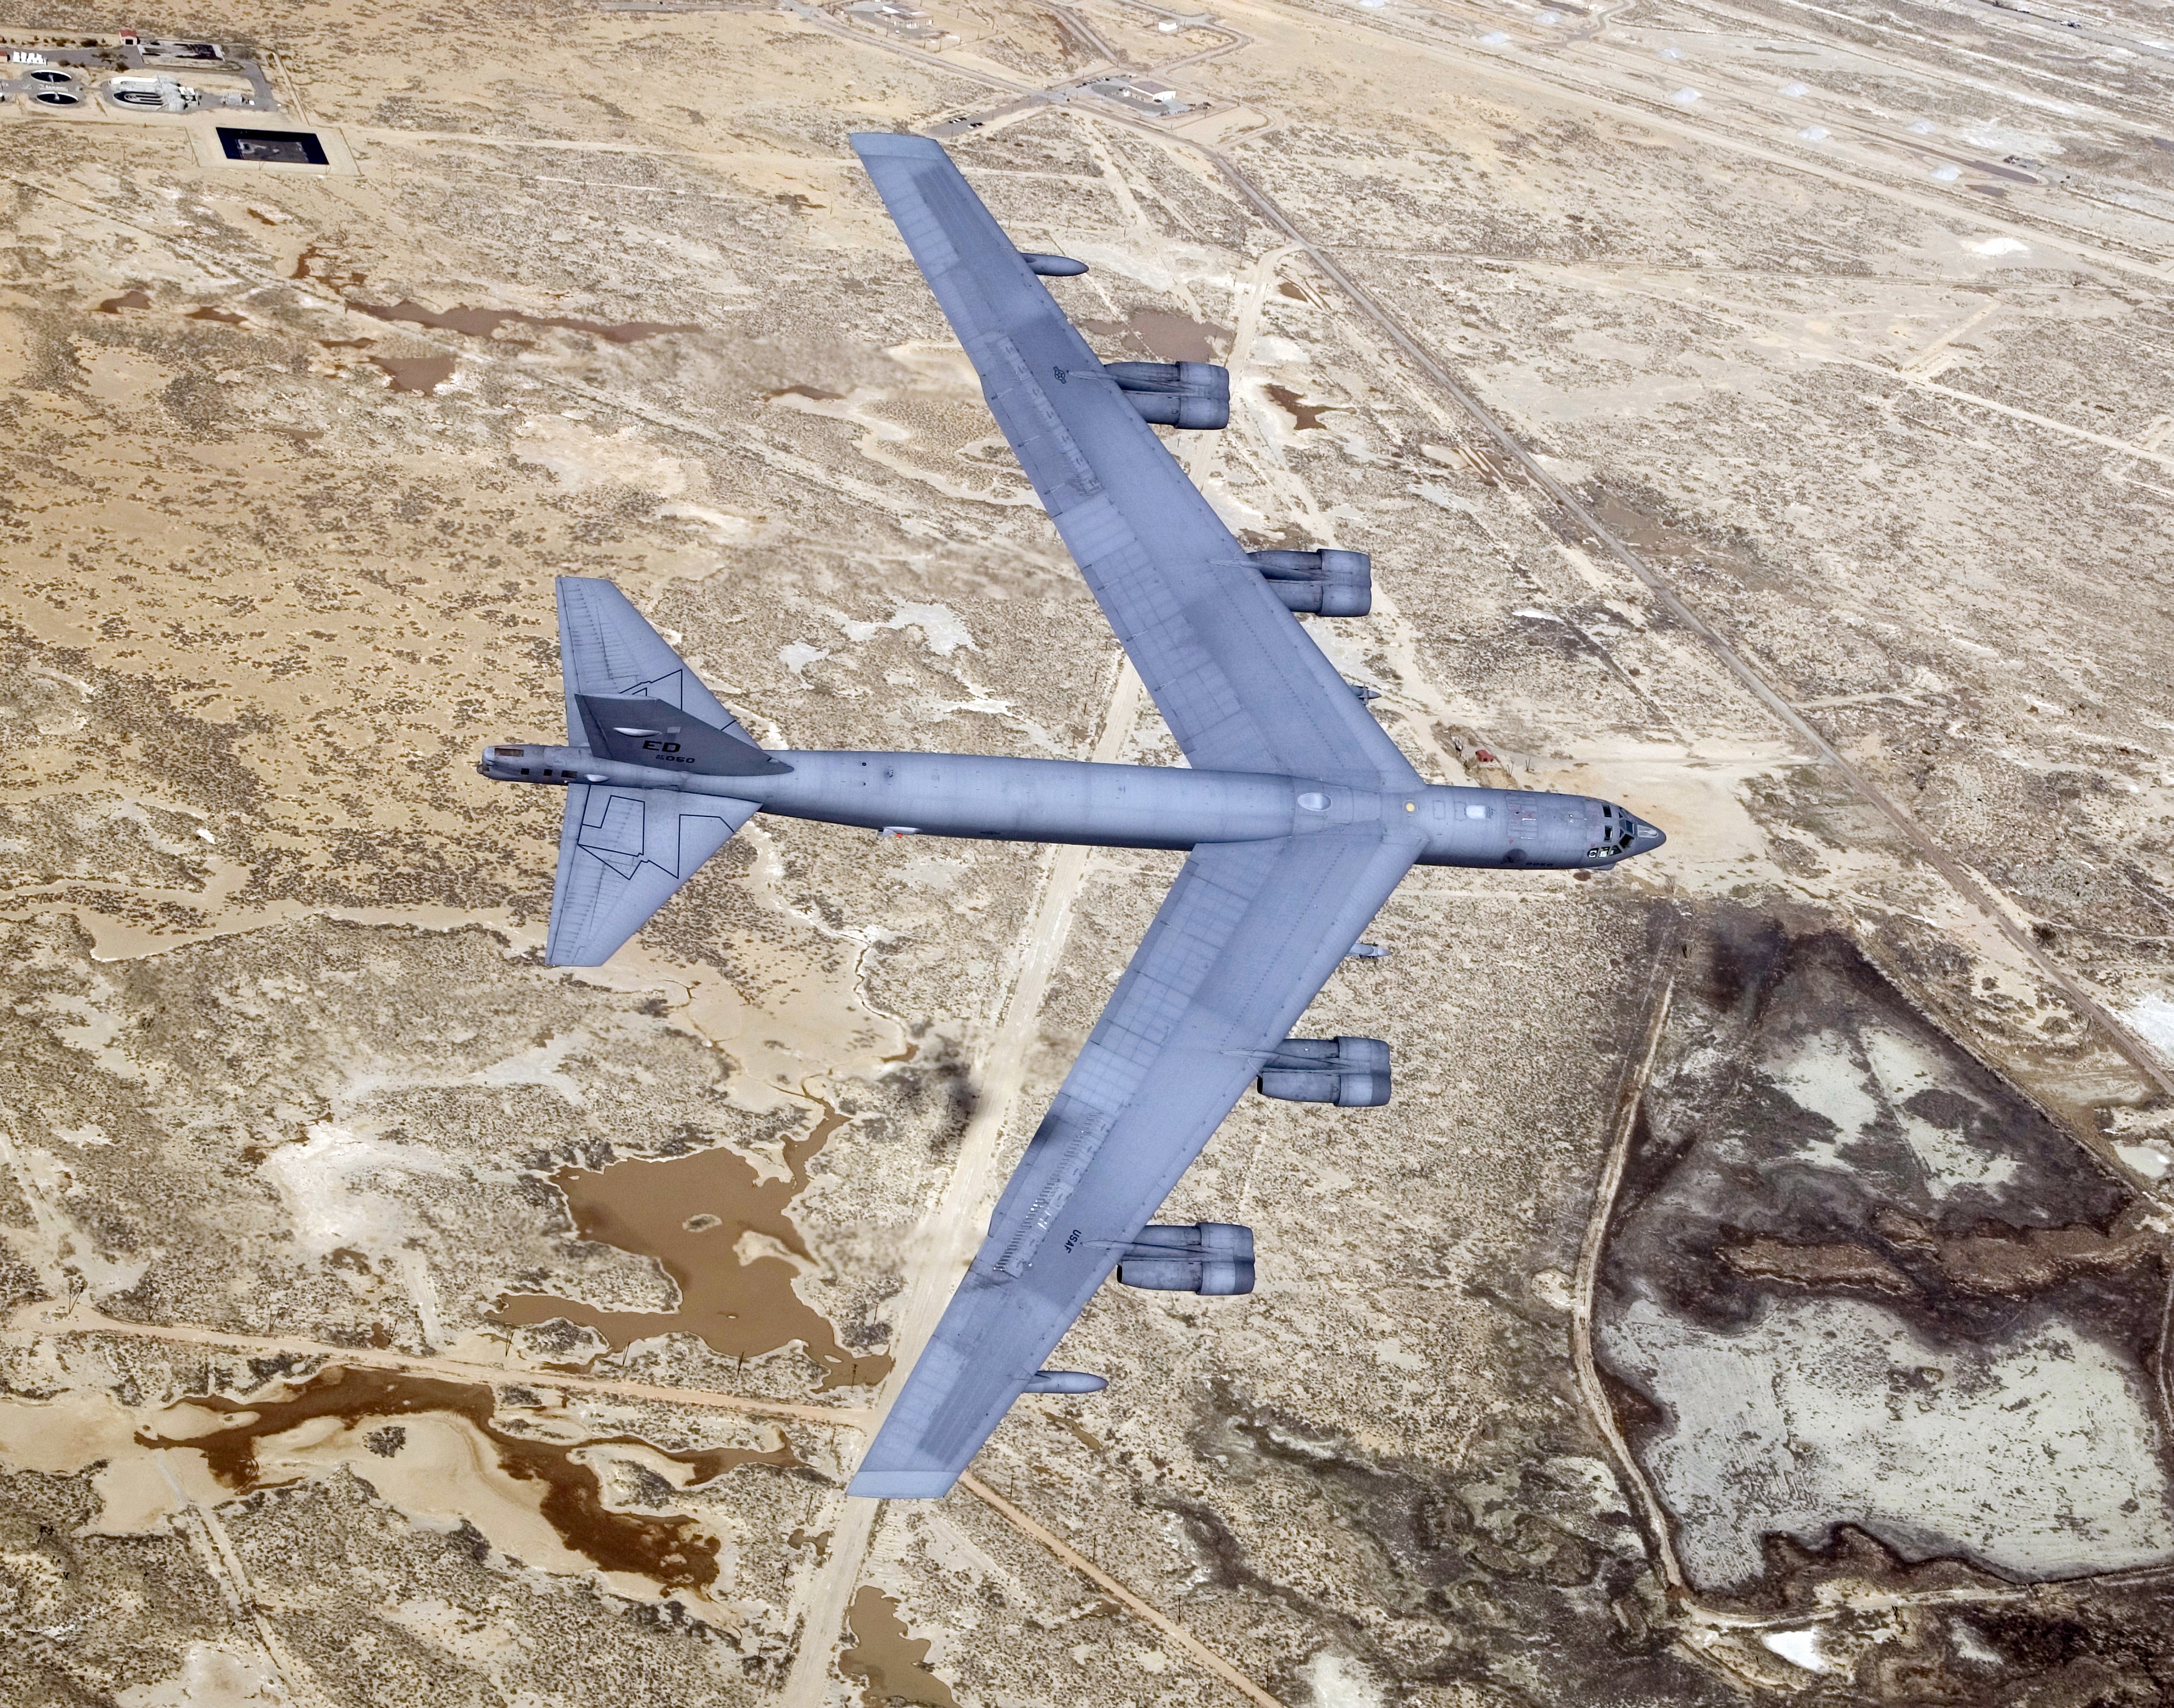 gpw-20051129-UnitedStatesAirForce-041202-F-9126G-039-B-52-Stratofortress-bomber-Edwards-Air-Force-Base-California-20041202-other.jpg